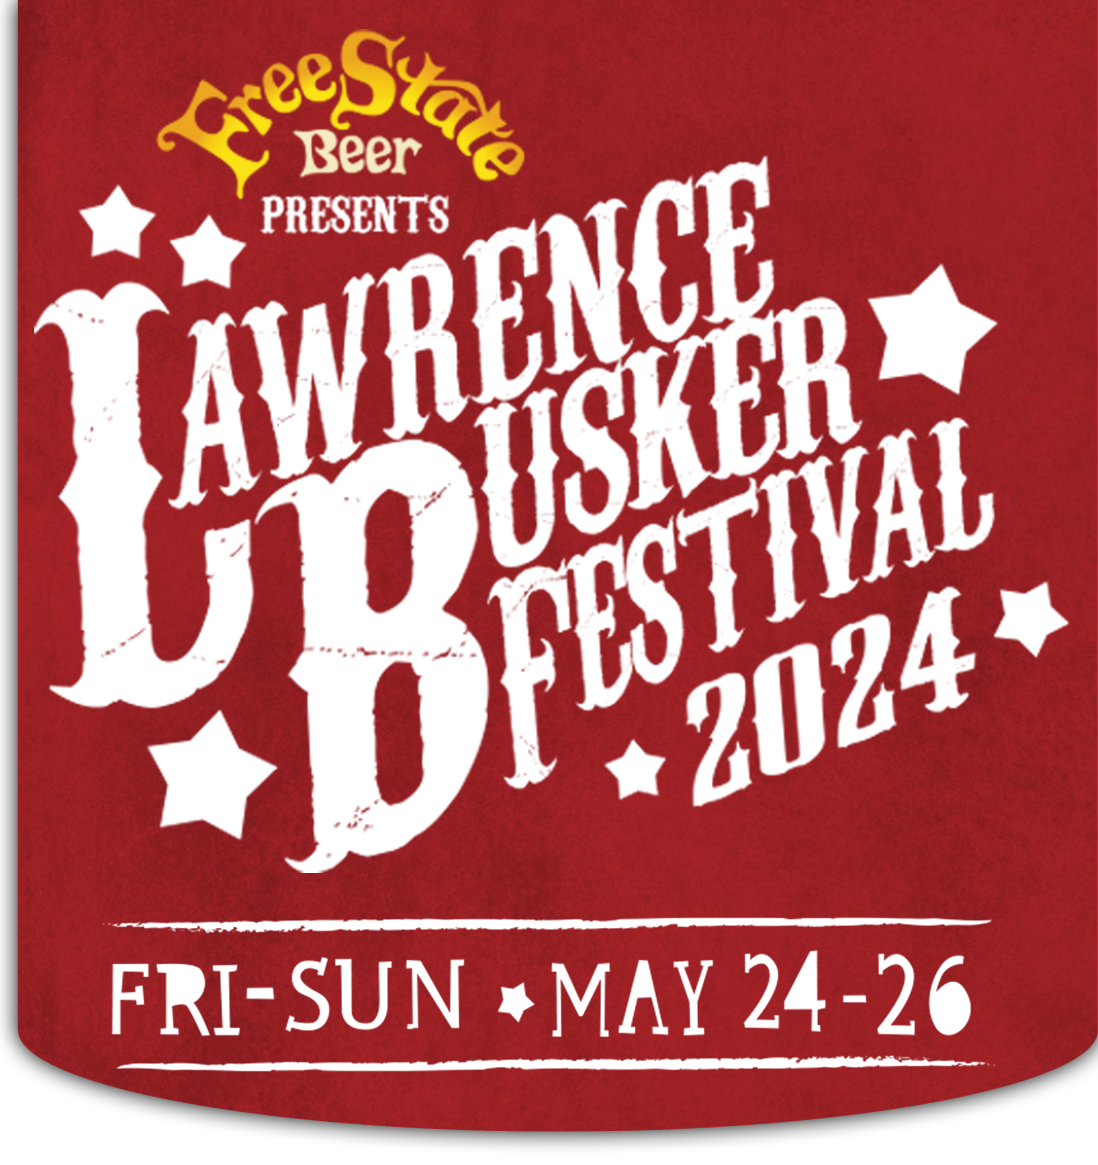 Lawrence Busker Festival